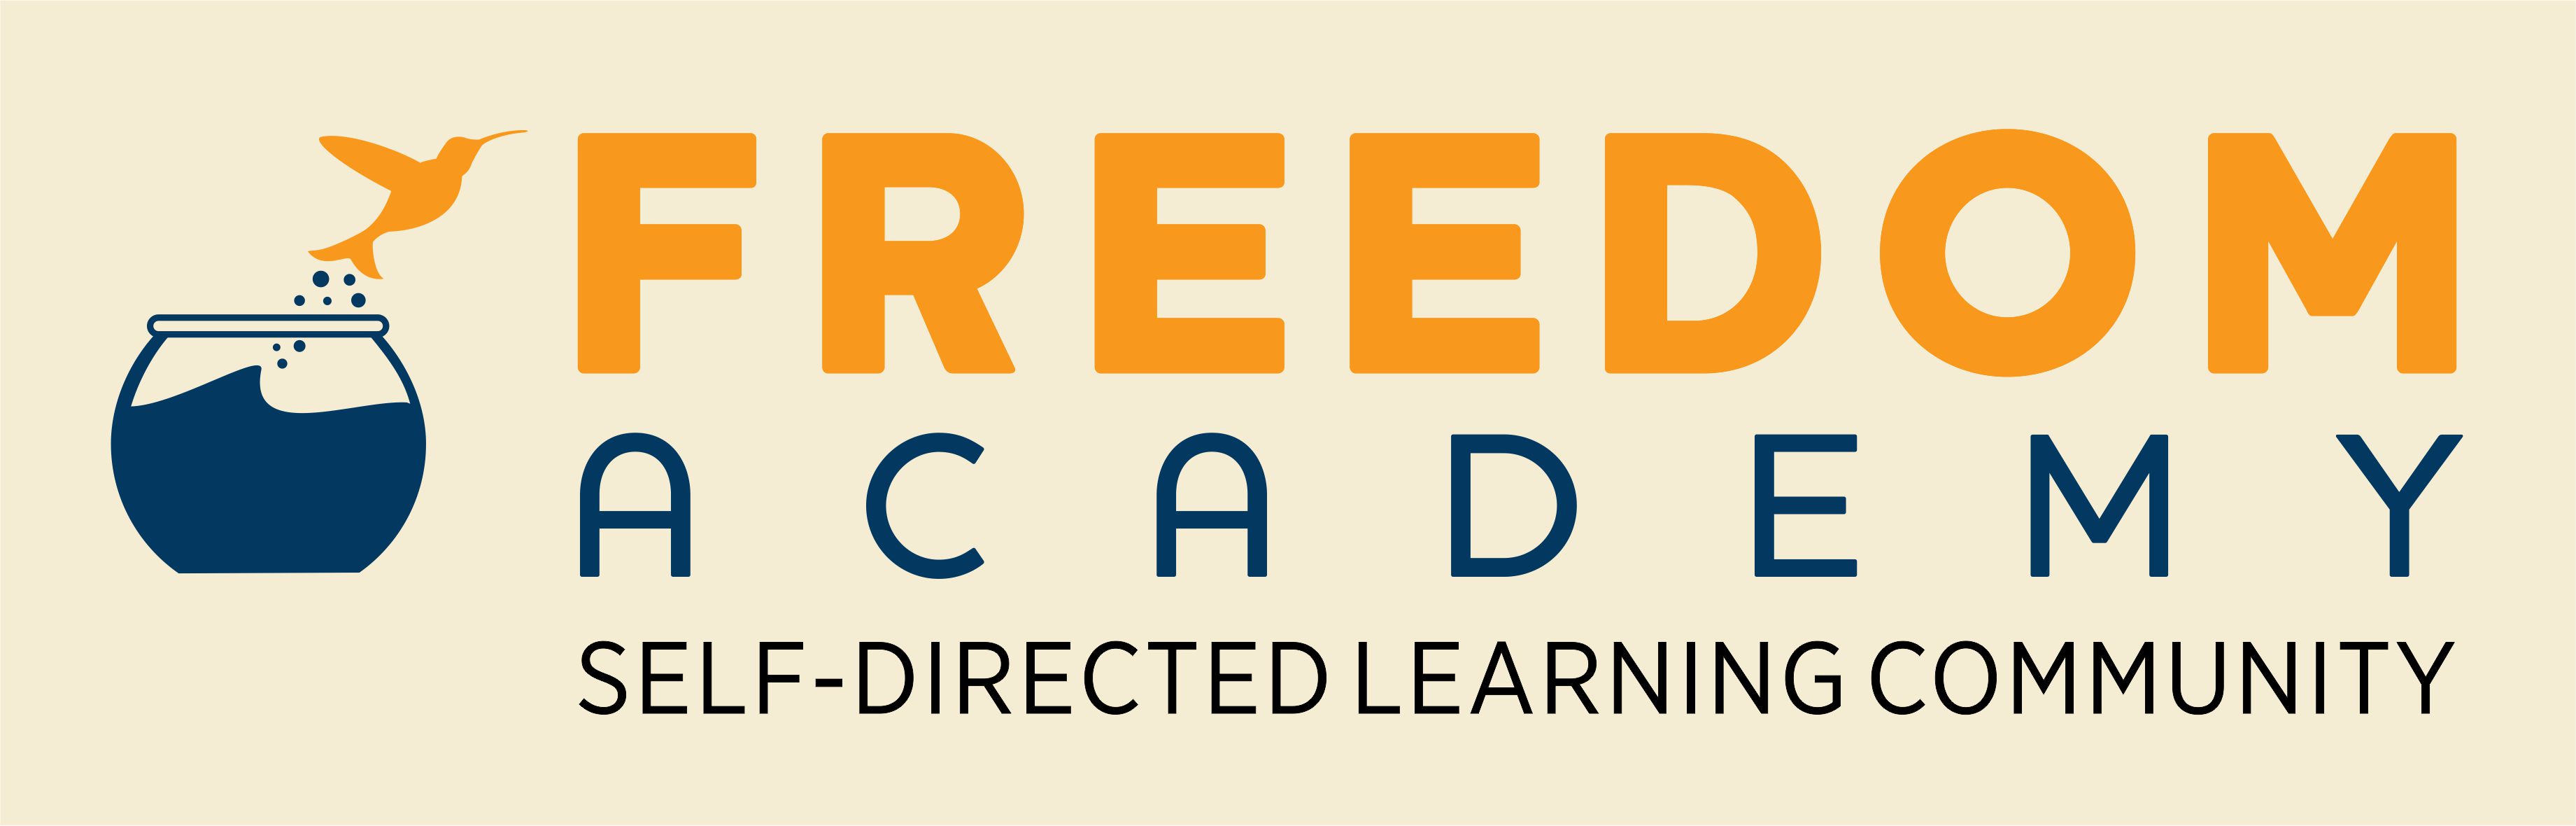 Freedom Academy logo